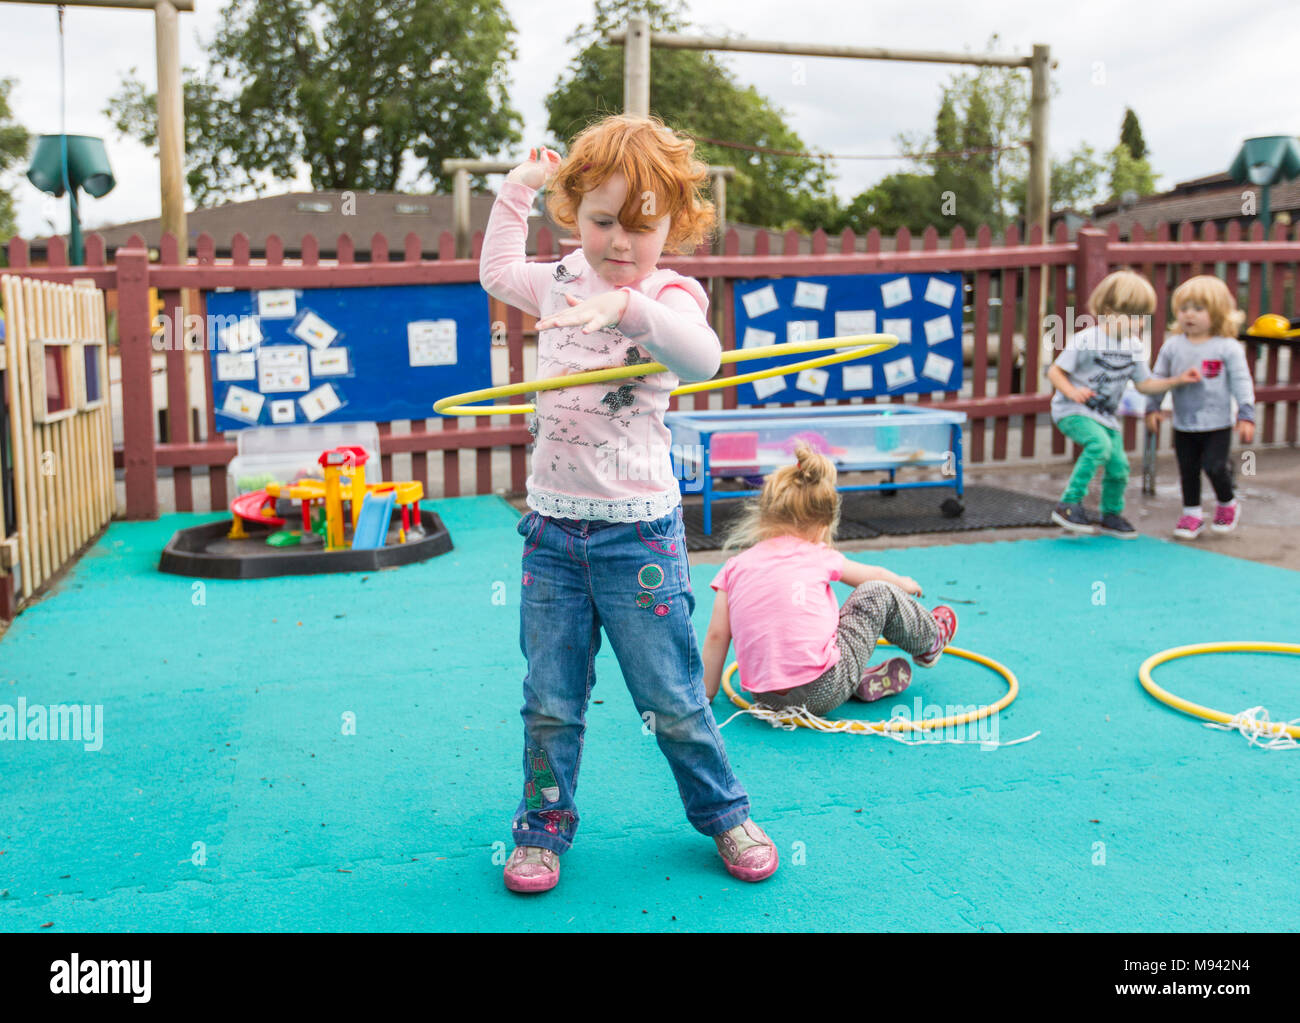 Nursery school children playing in a playground in Warwickshire, UK Stock Photo